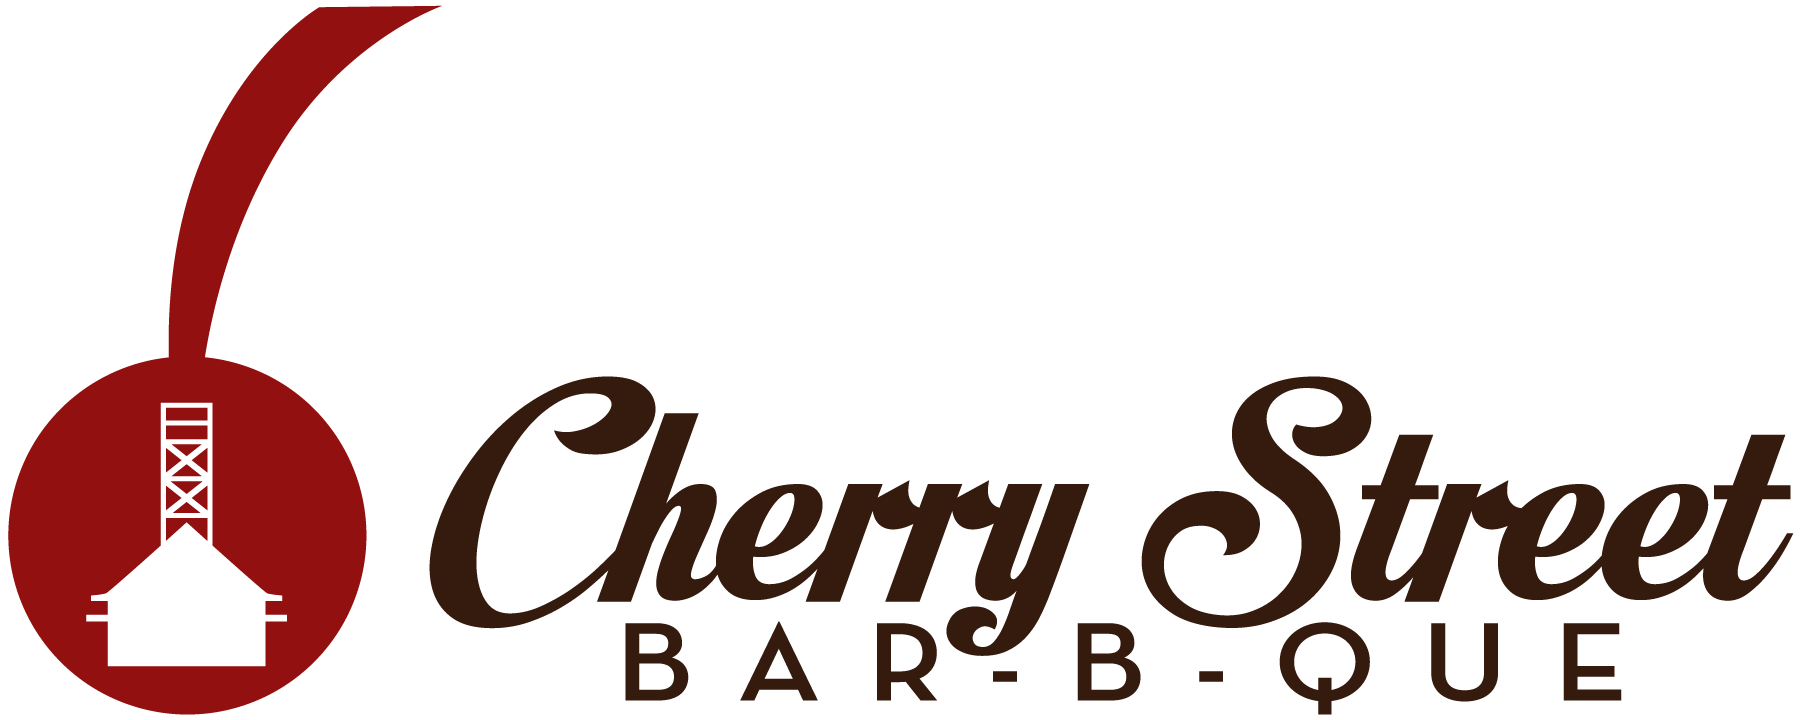 Cherry St. BBQ